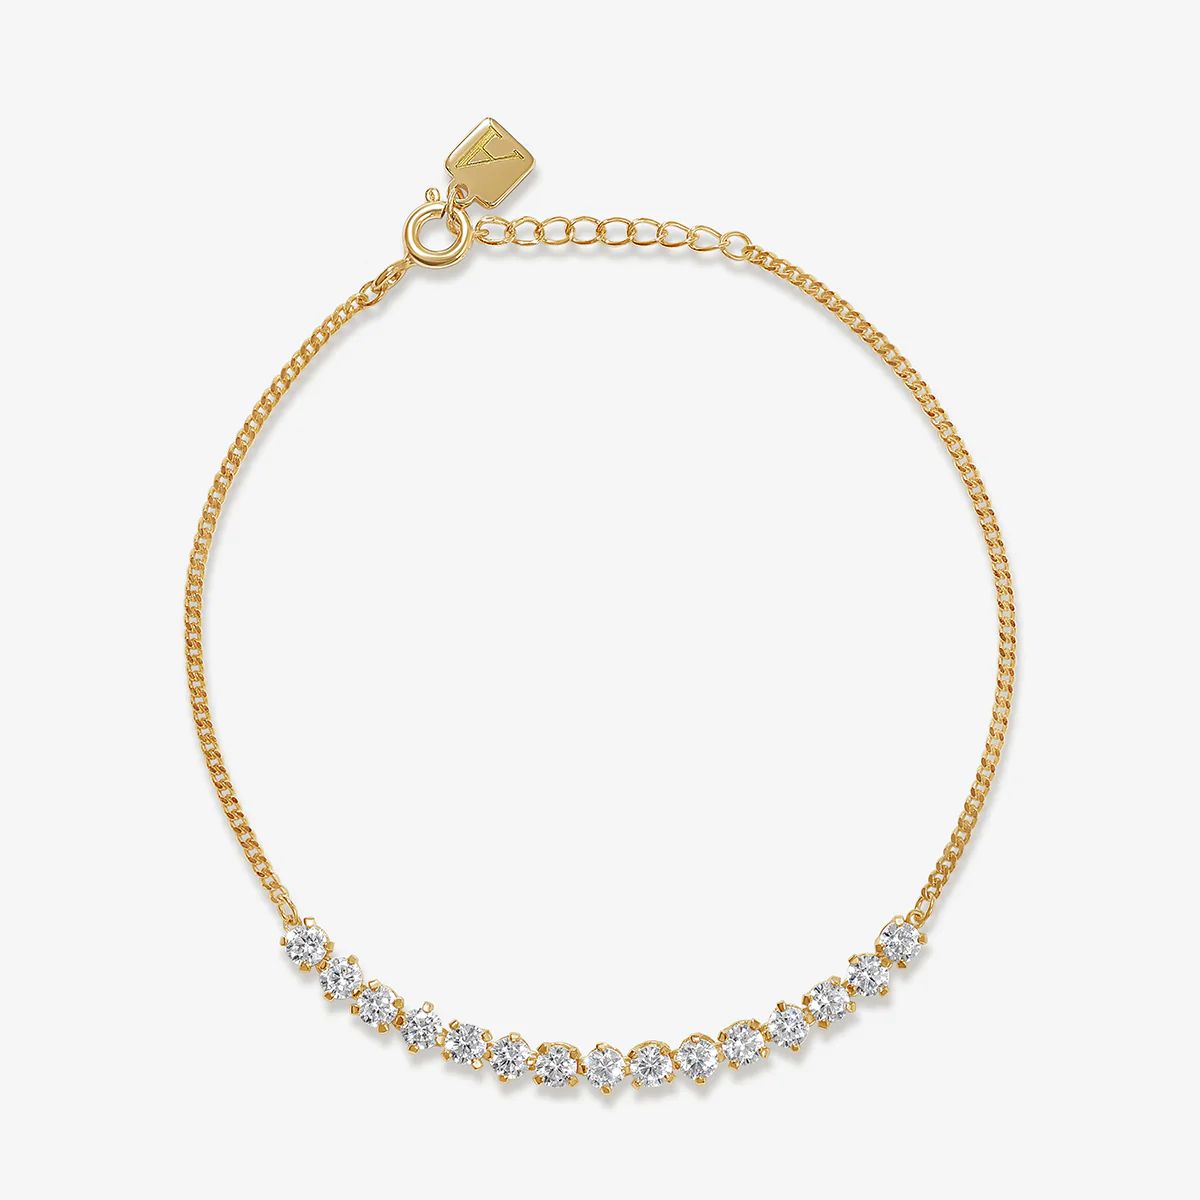 Dane crystal bracelet | Adornmonde